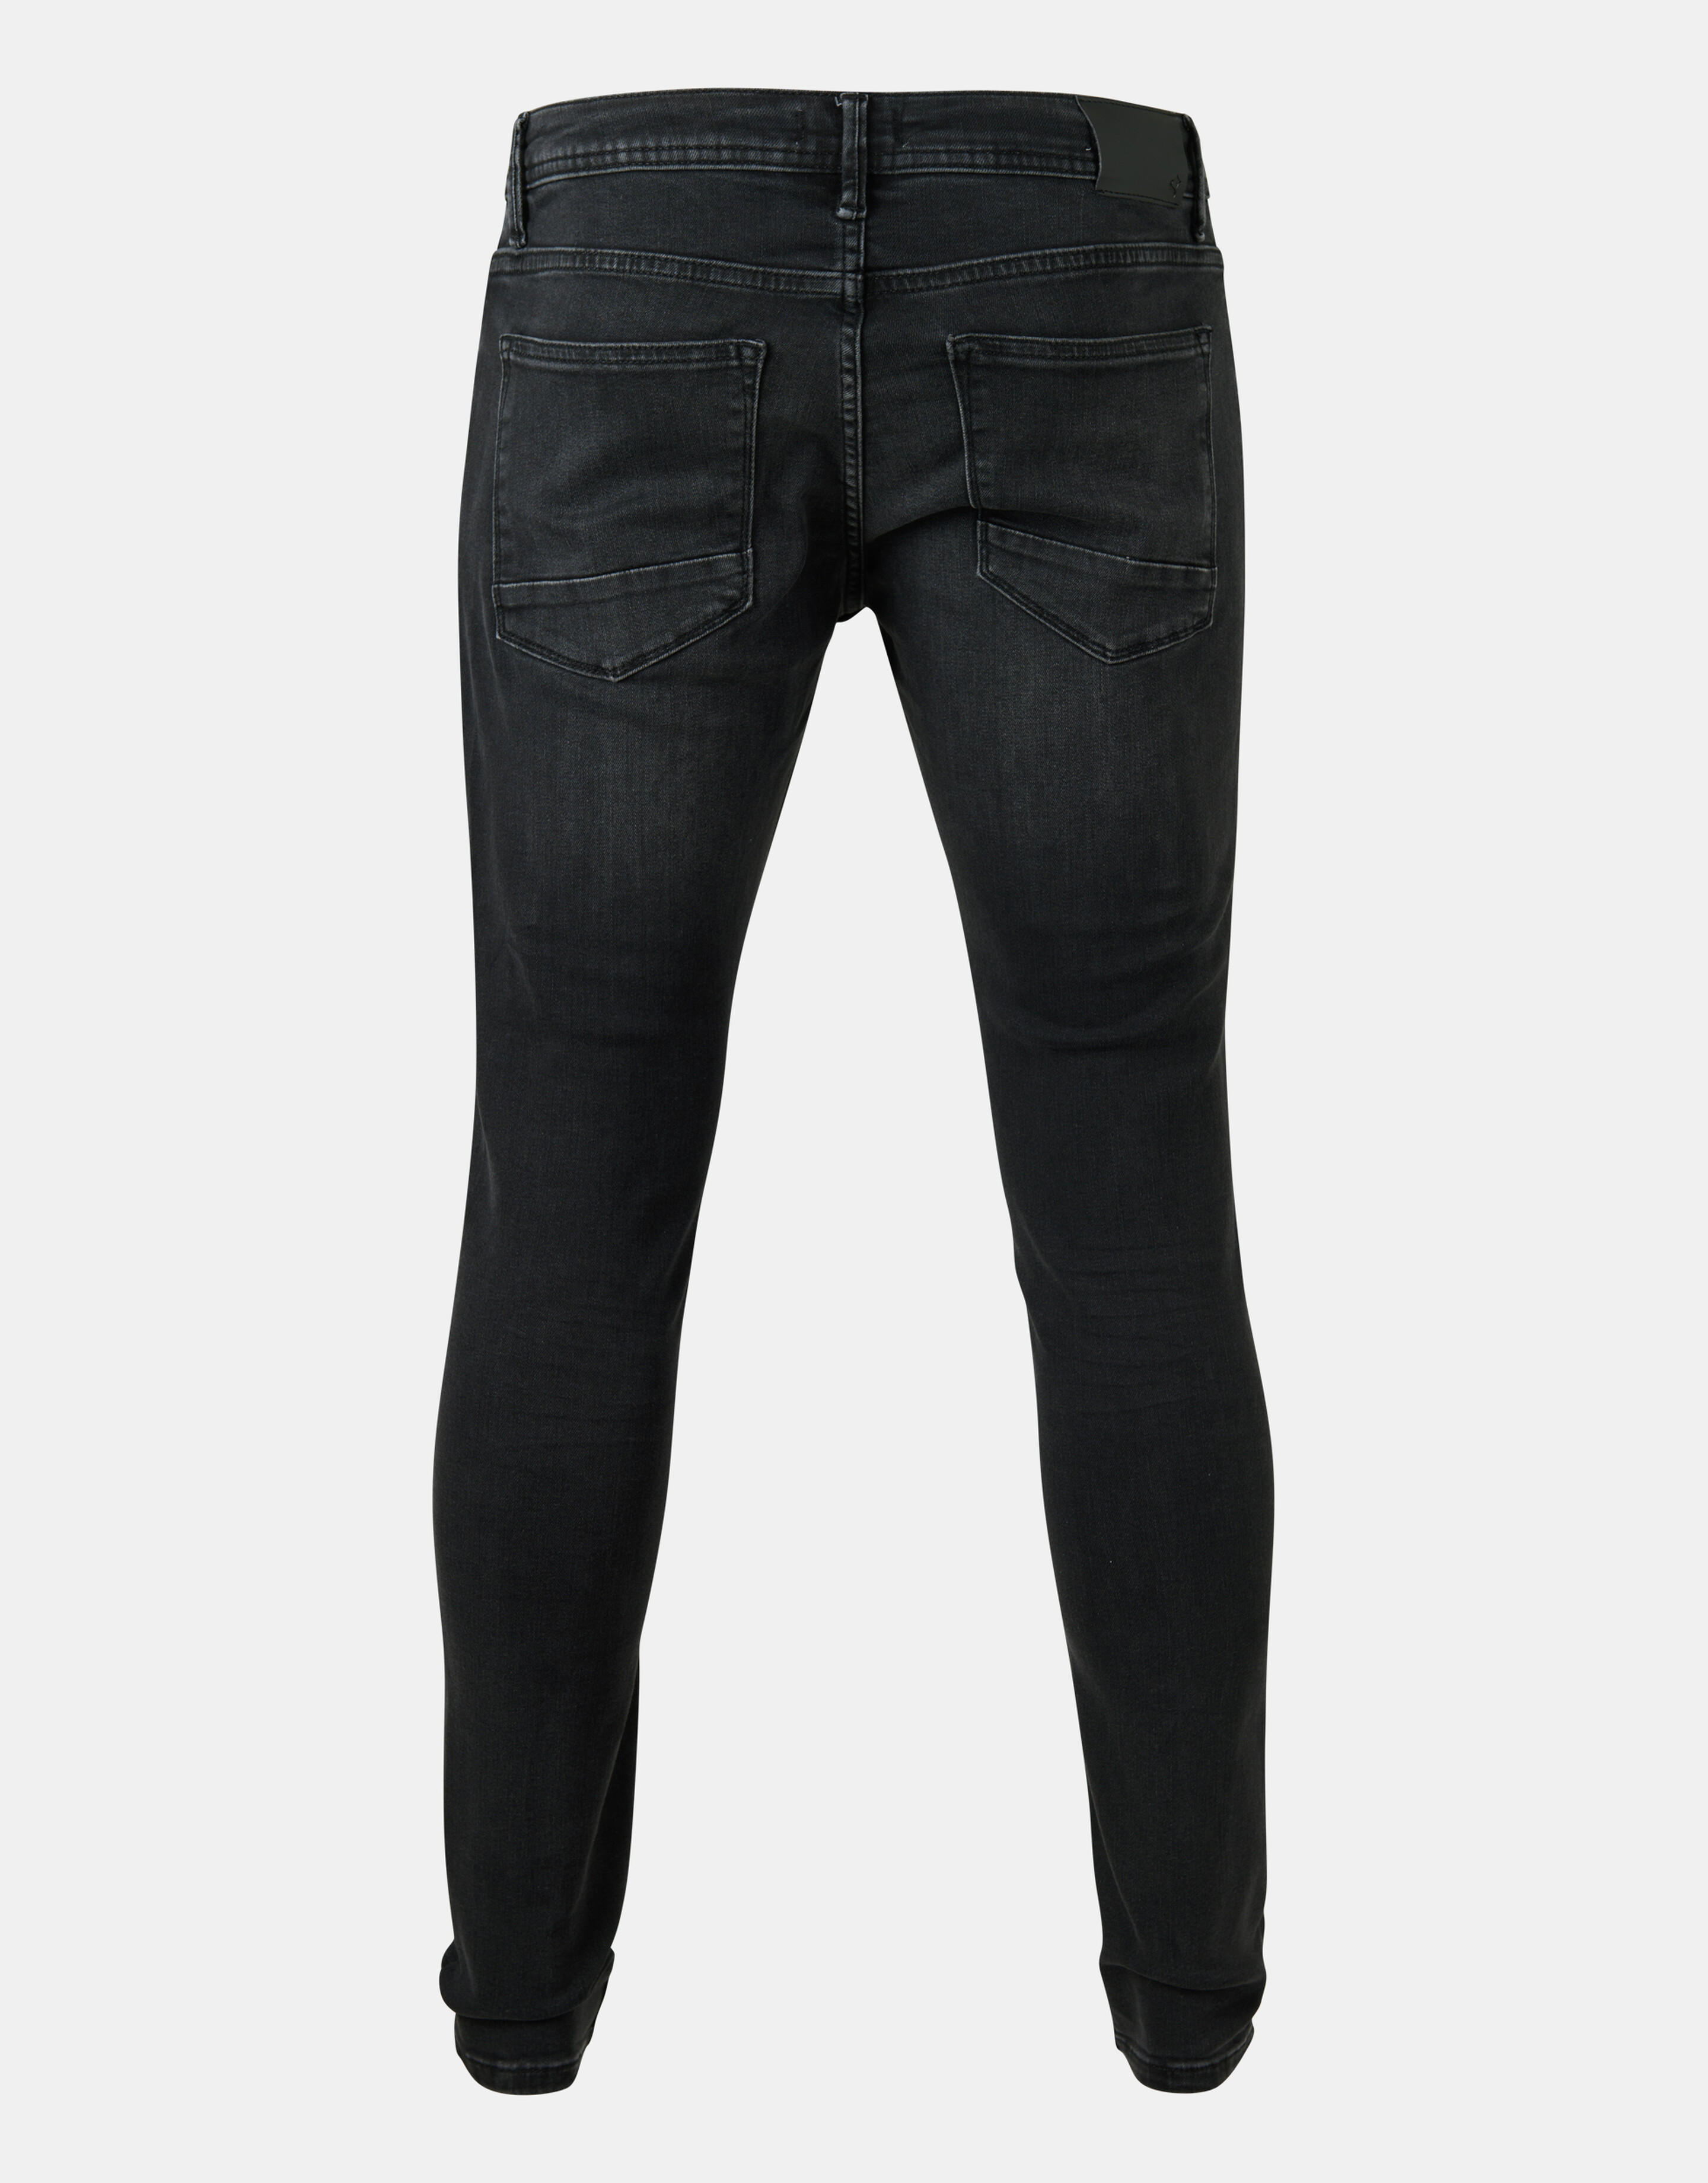 Skinny Jeans Jack Washed Black L34 Refill